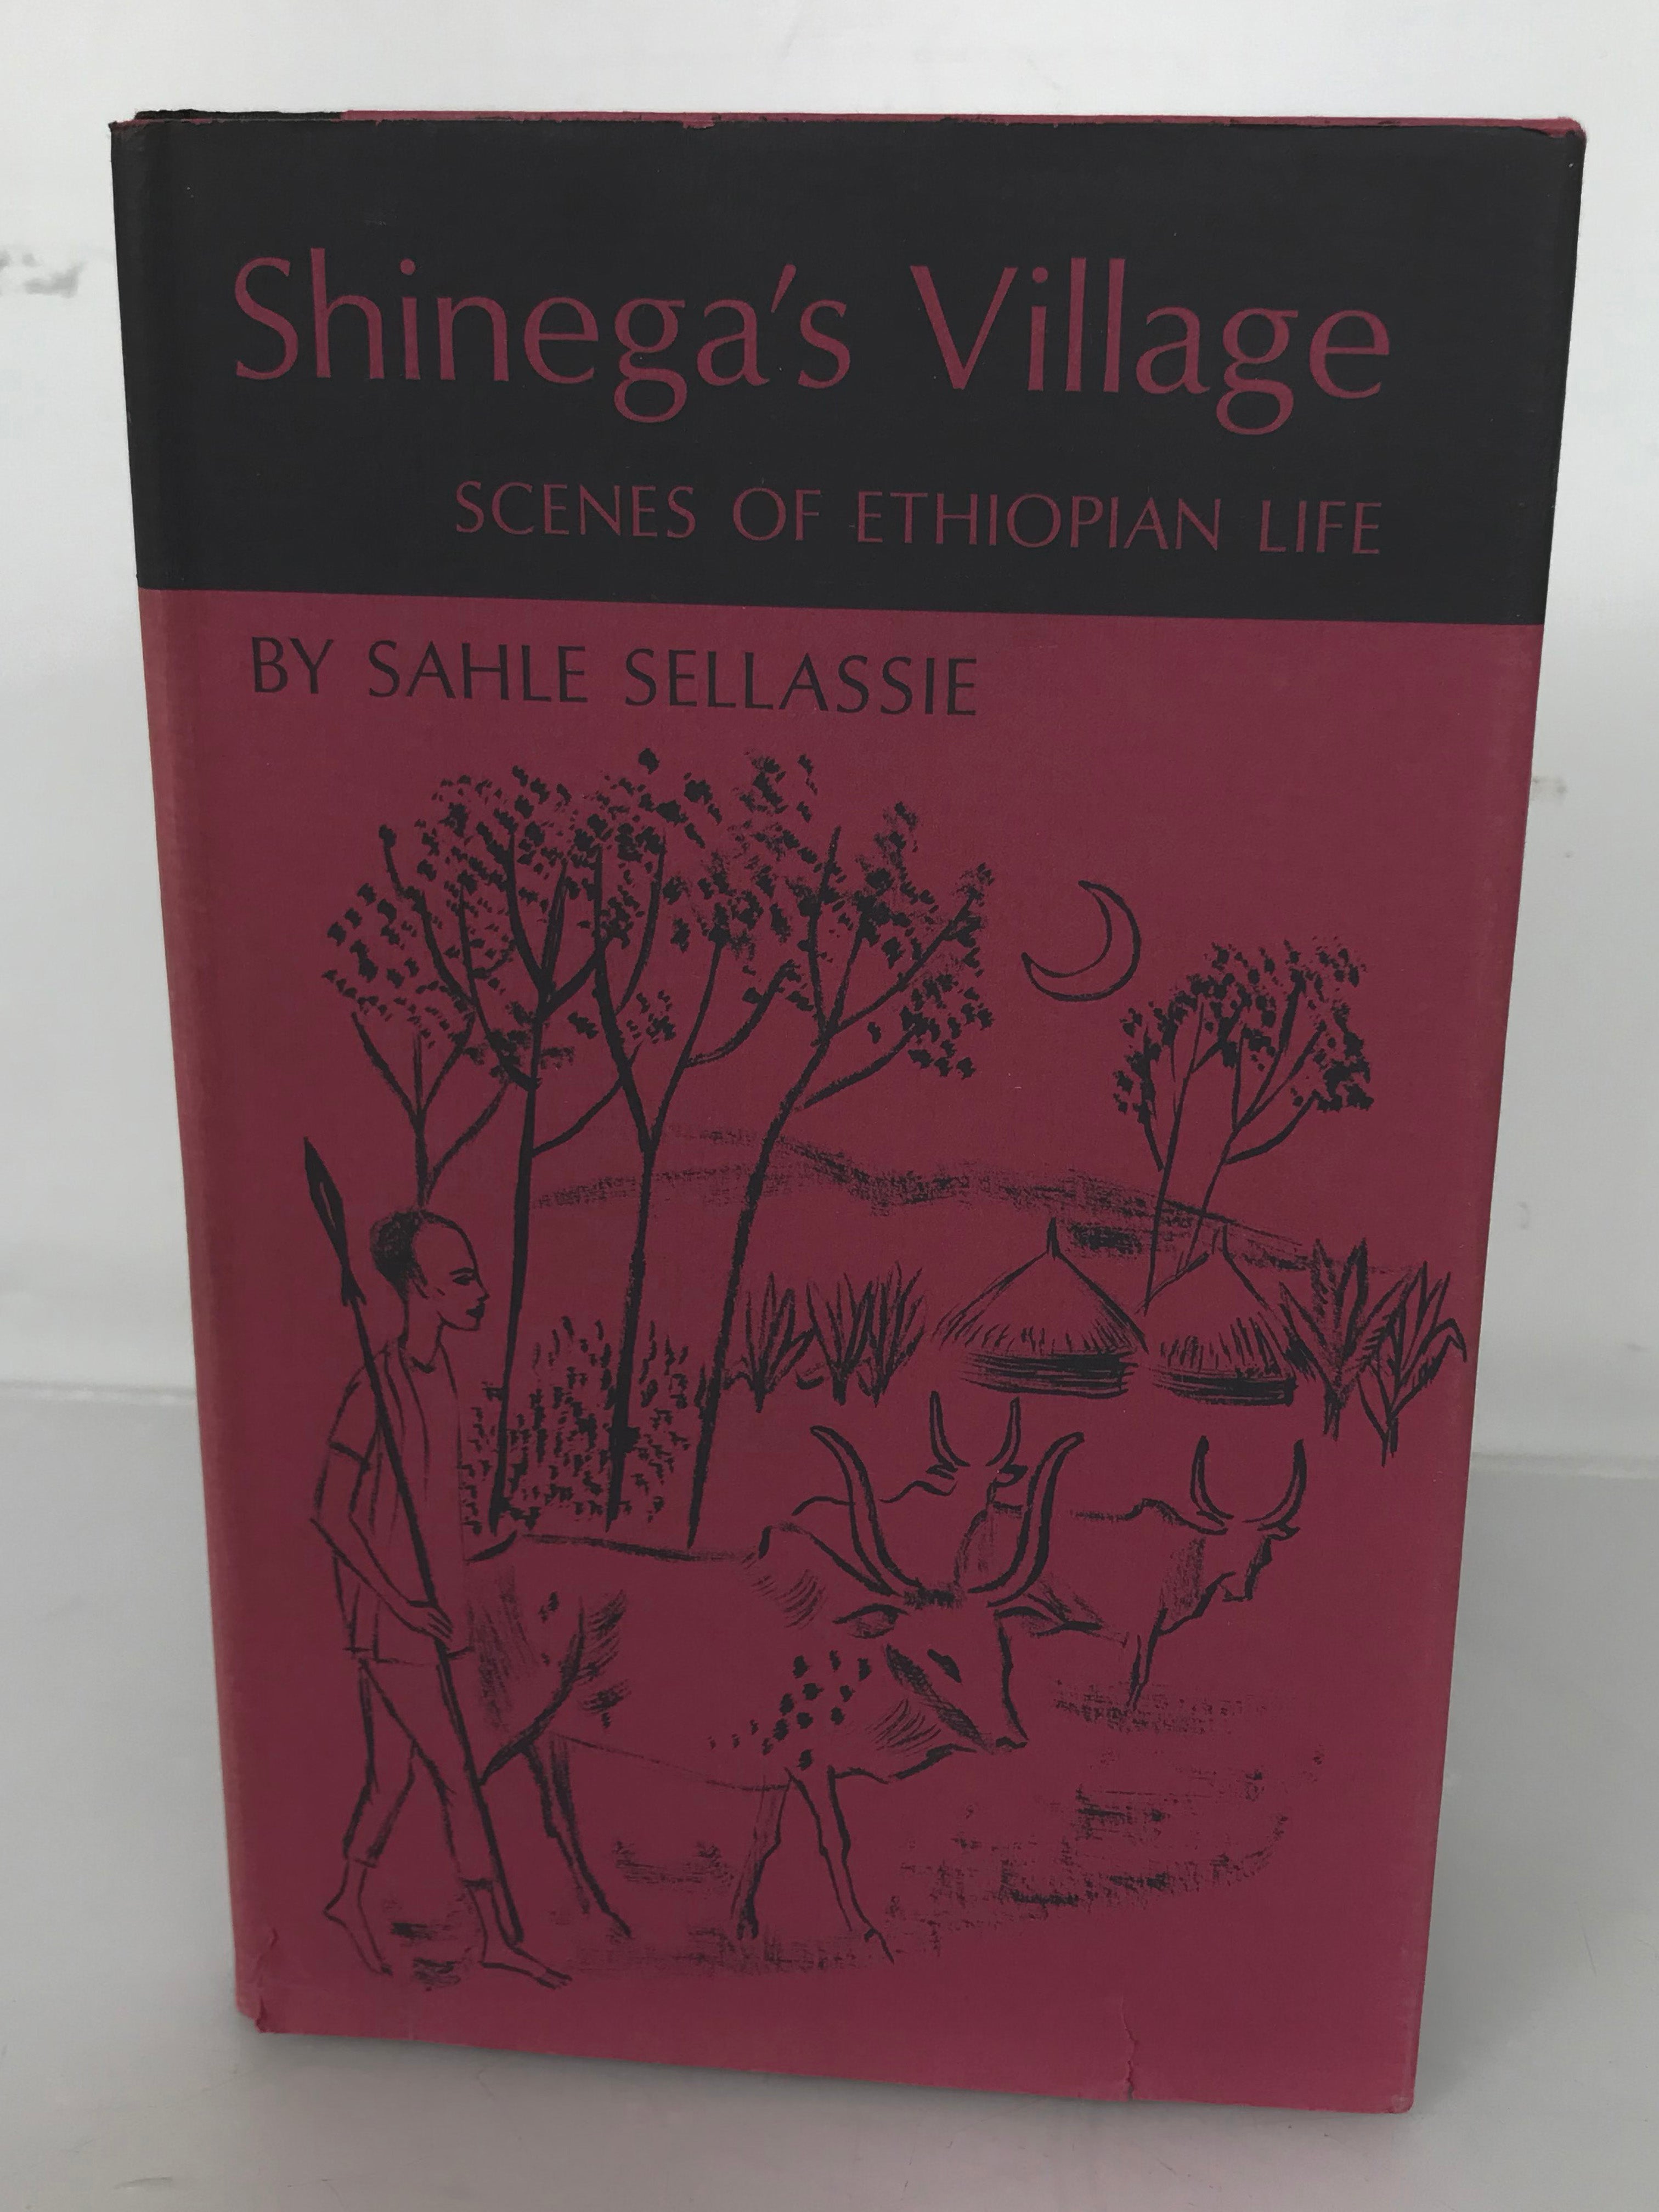 Shinega's Village: Scenes of Ethiopian Life by Sahle Sallassie 1964